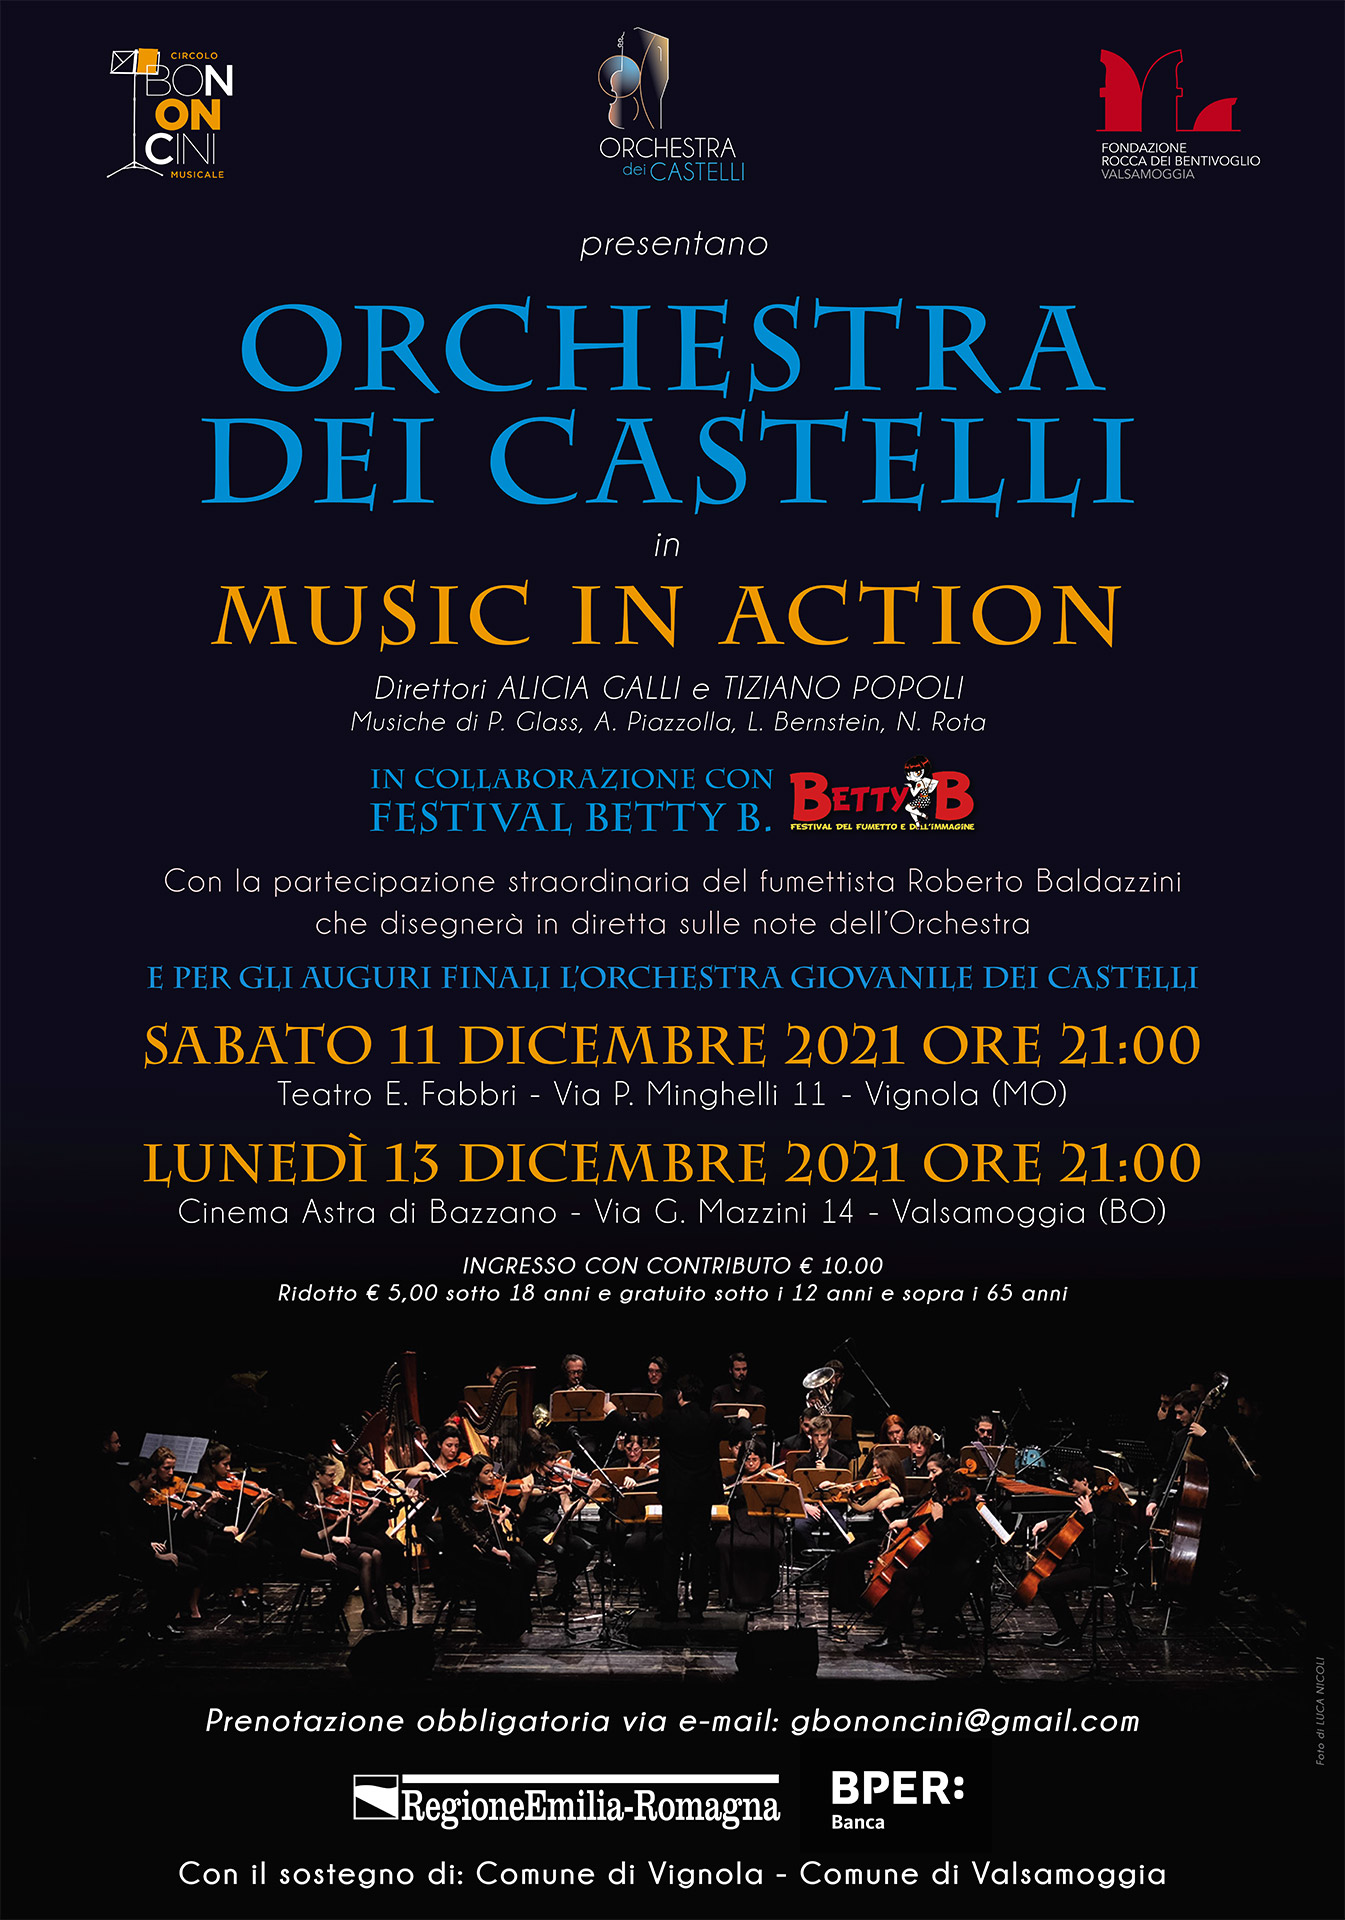 Music in Action – Orchestra dei castelli